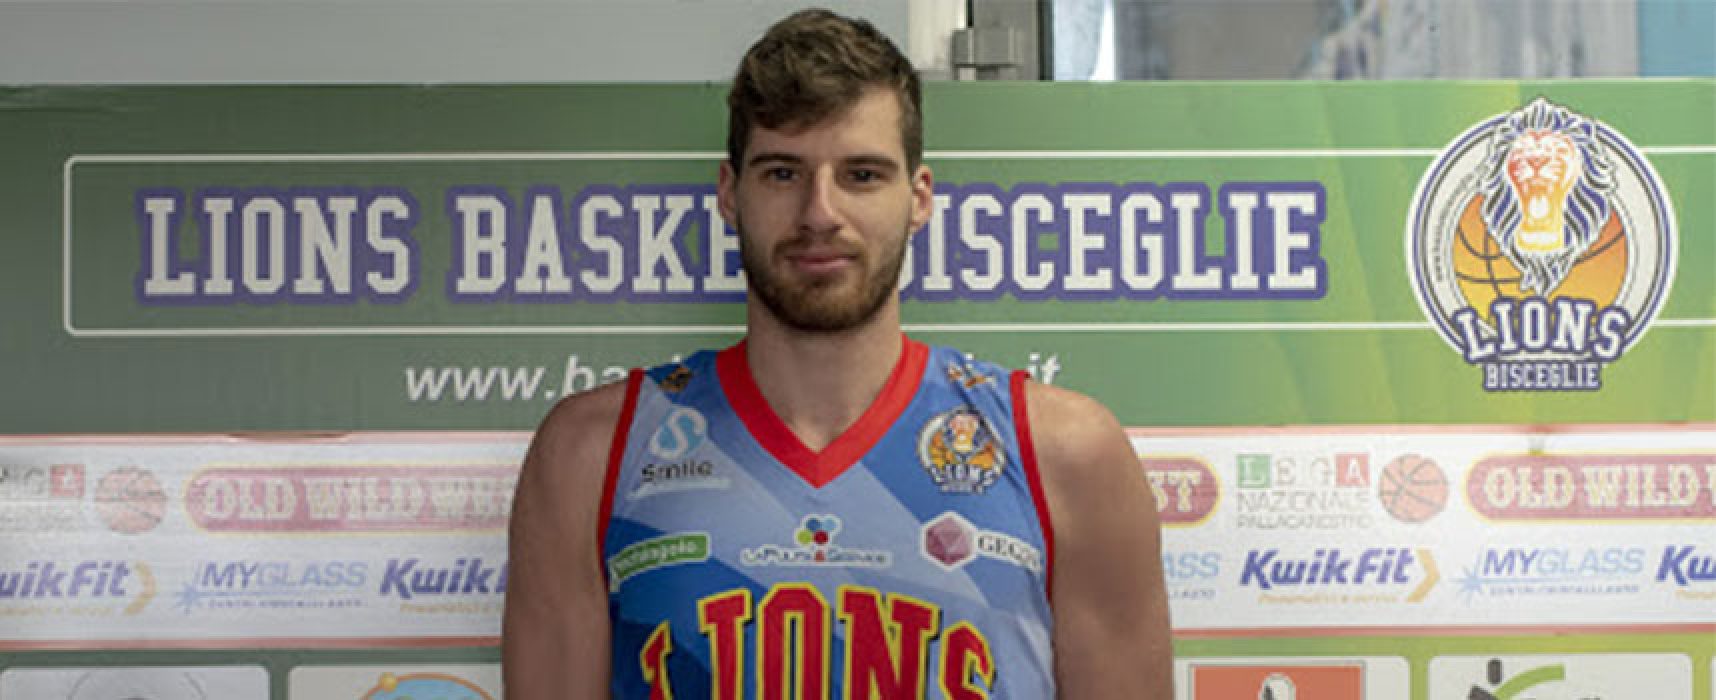 Lions basket, Leonardo Marini approda ai Tigers Cesena